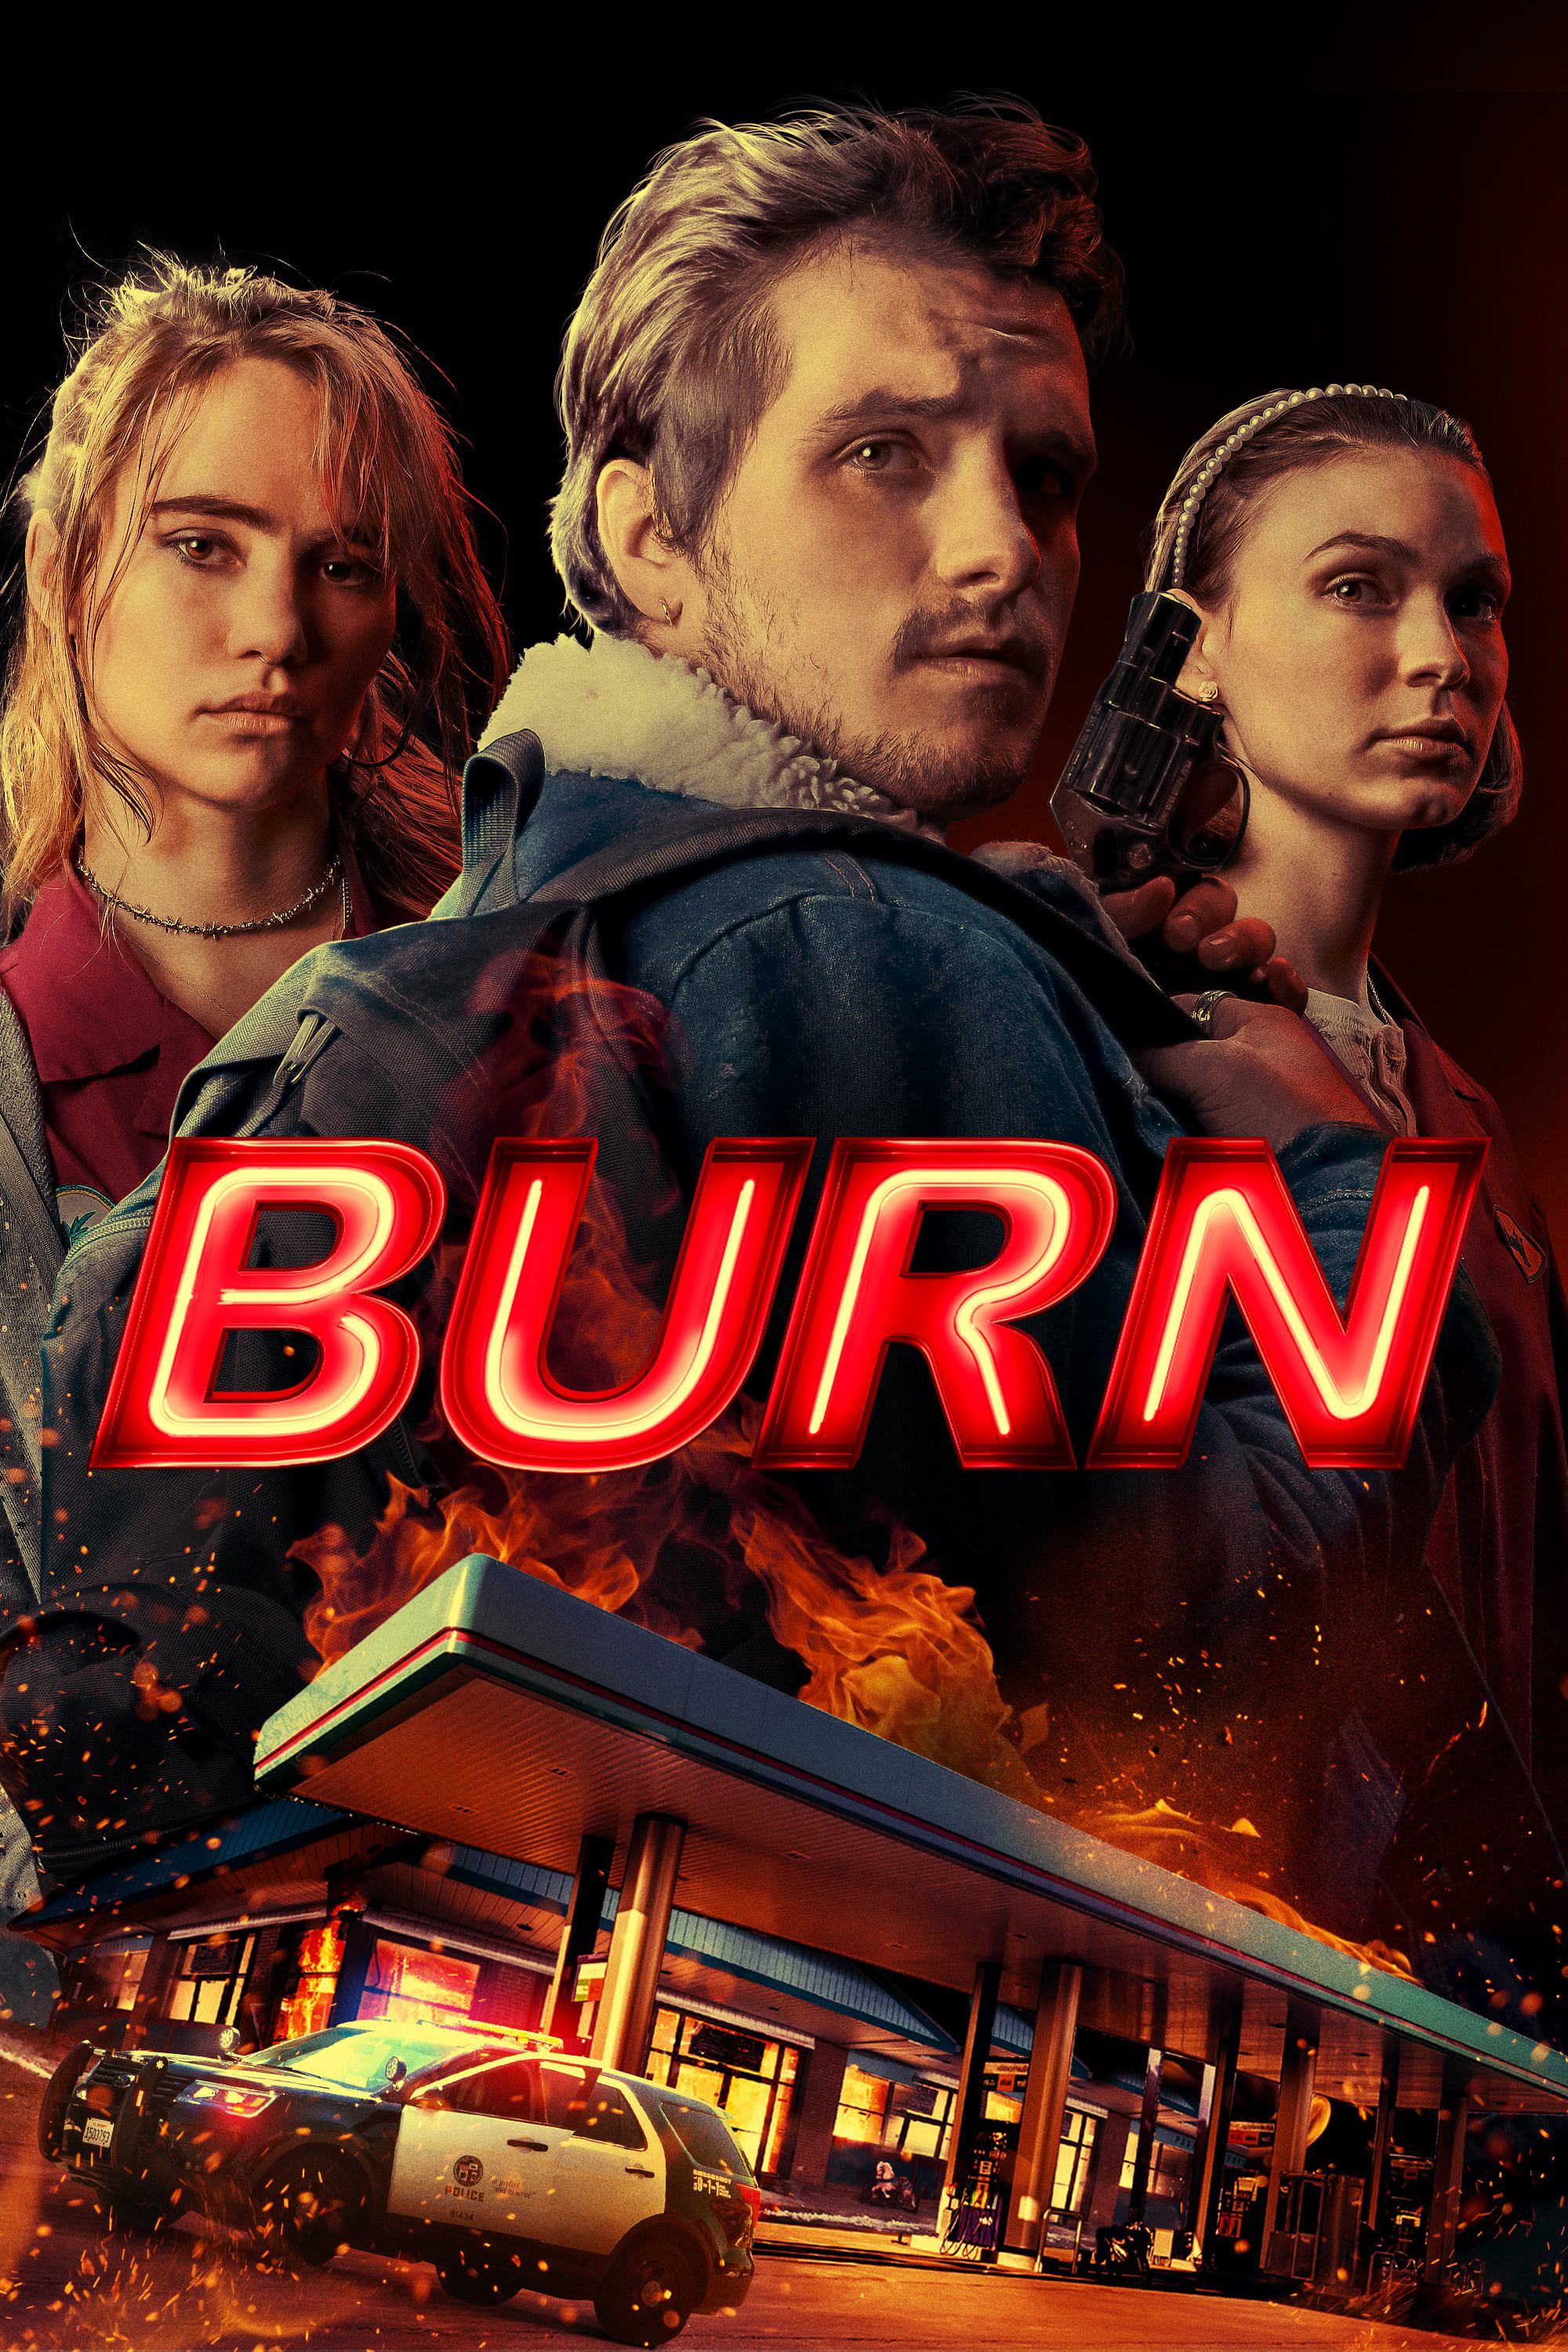 Affiche du film "Burn"